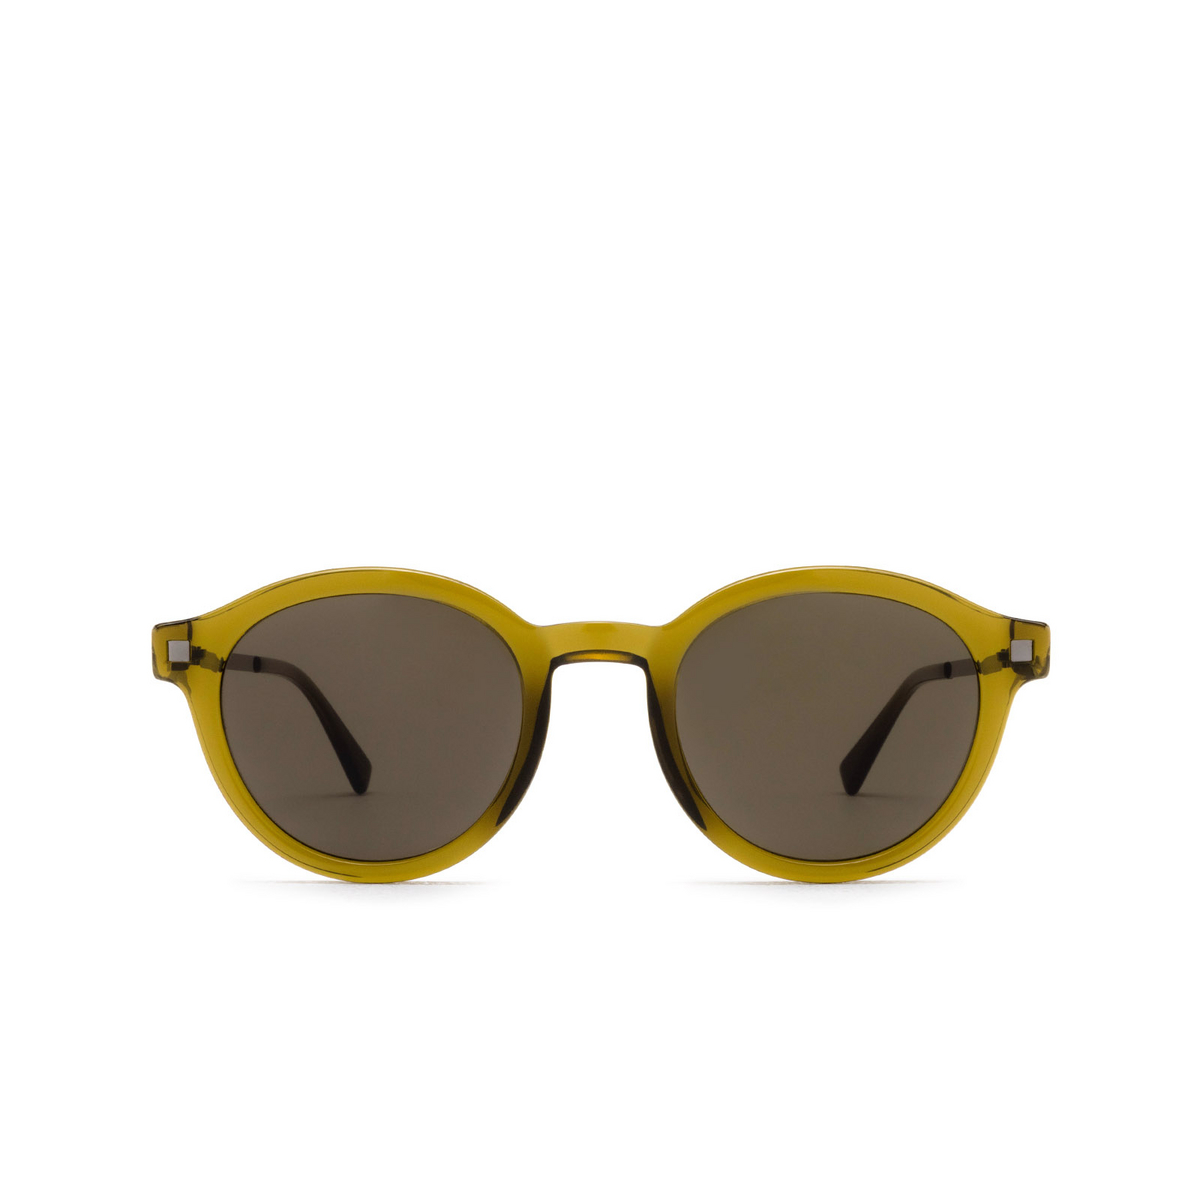 Mykita KETILL Sunglasses 723 C114 Peridot/Shiny Graphite - front view